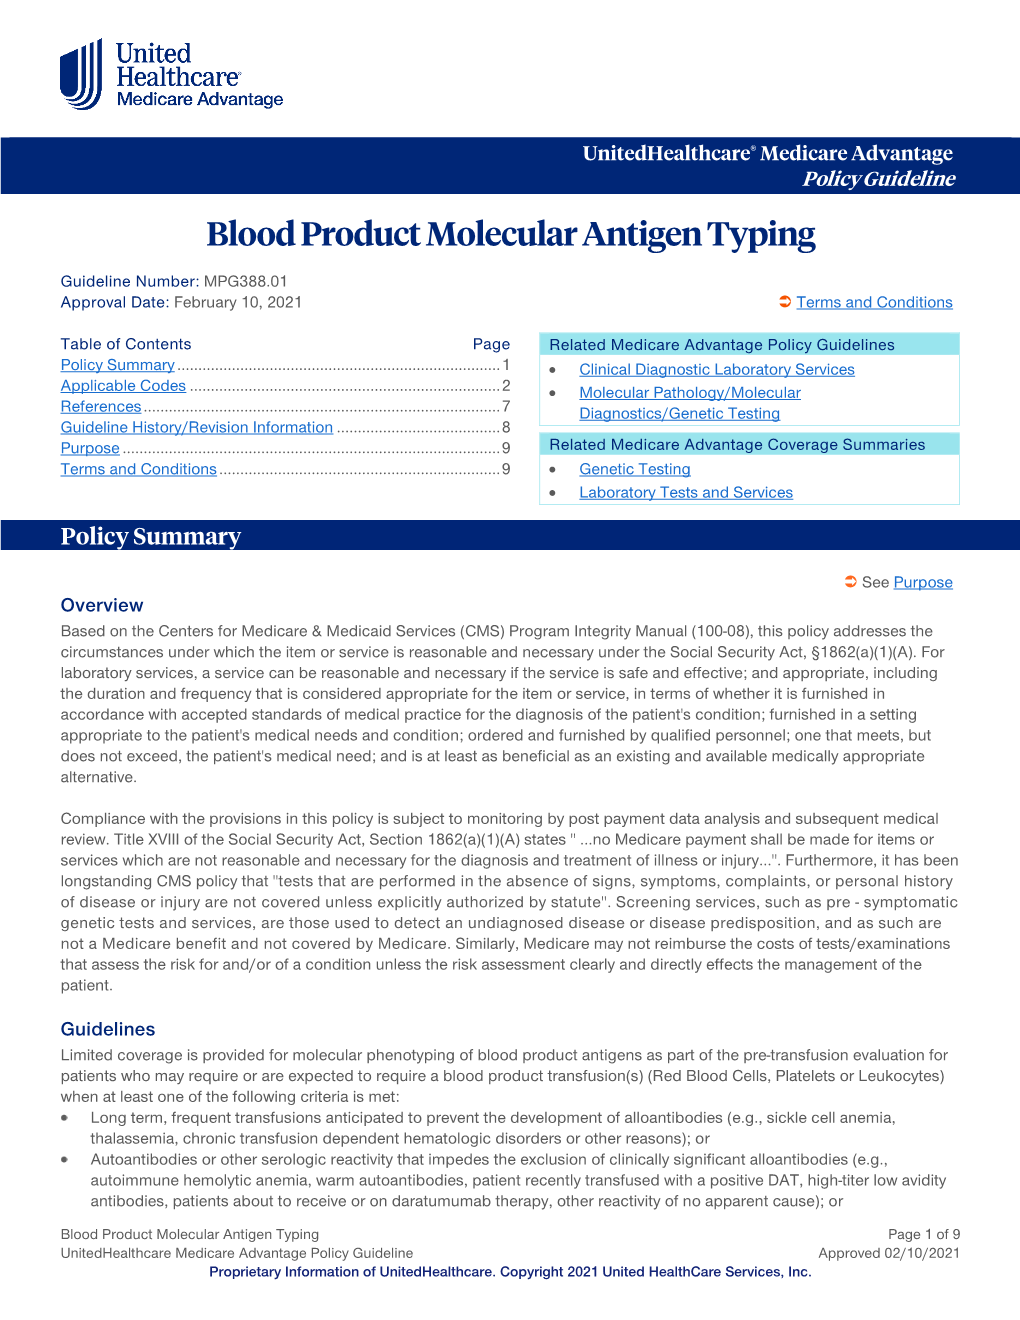 Blood Product Molecular Antigen Typing